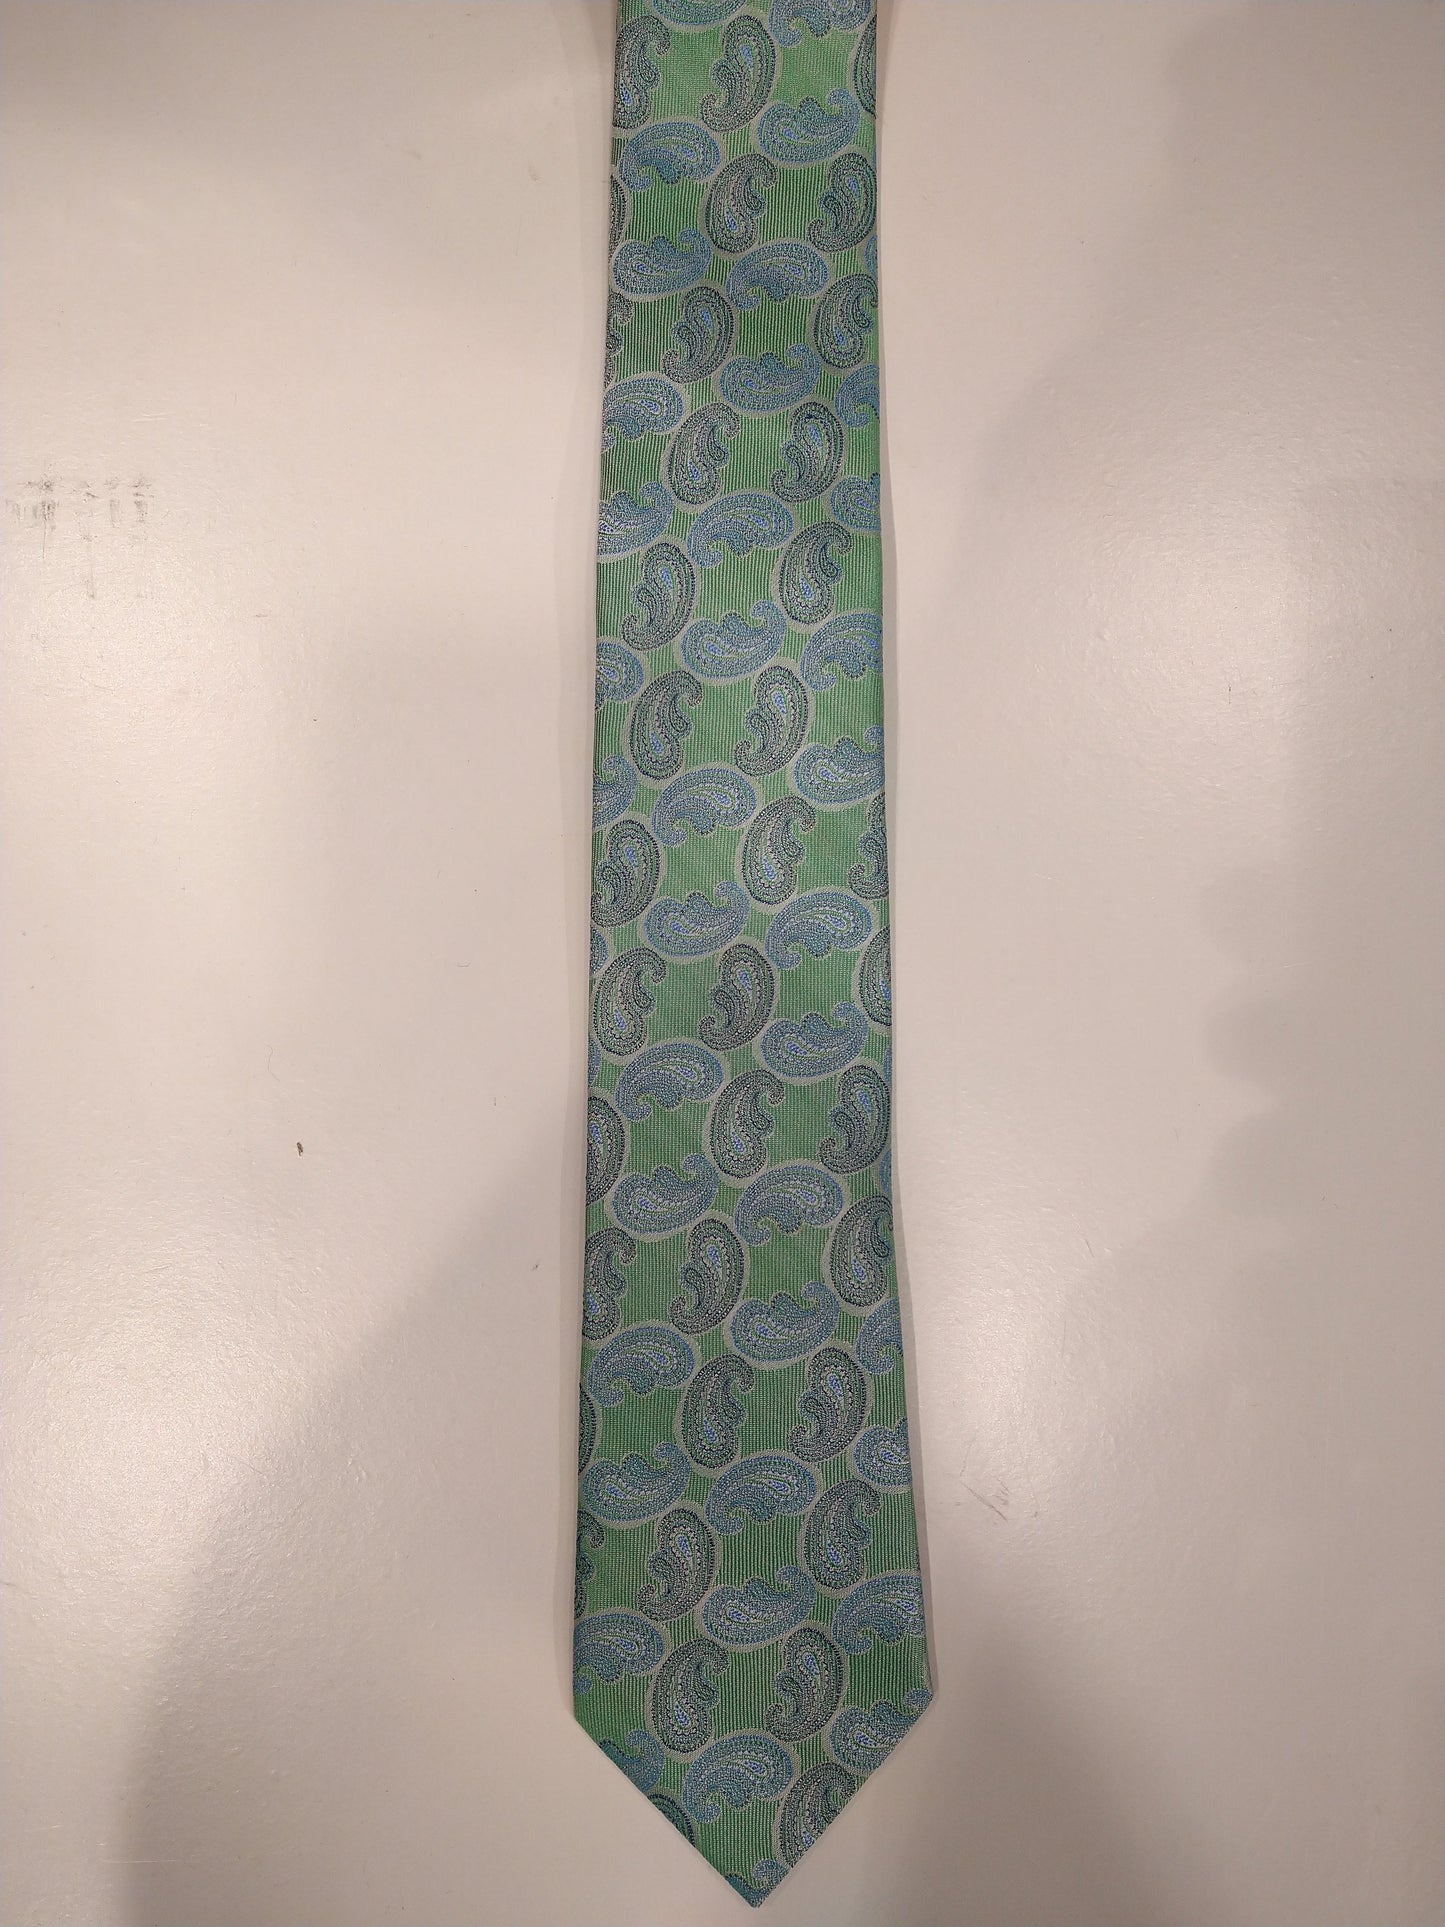 Cravatta di seta Max Goodman. Motivo verde blu.